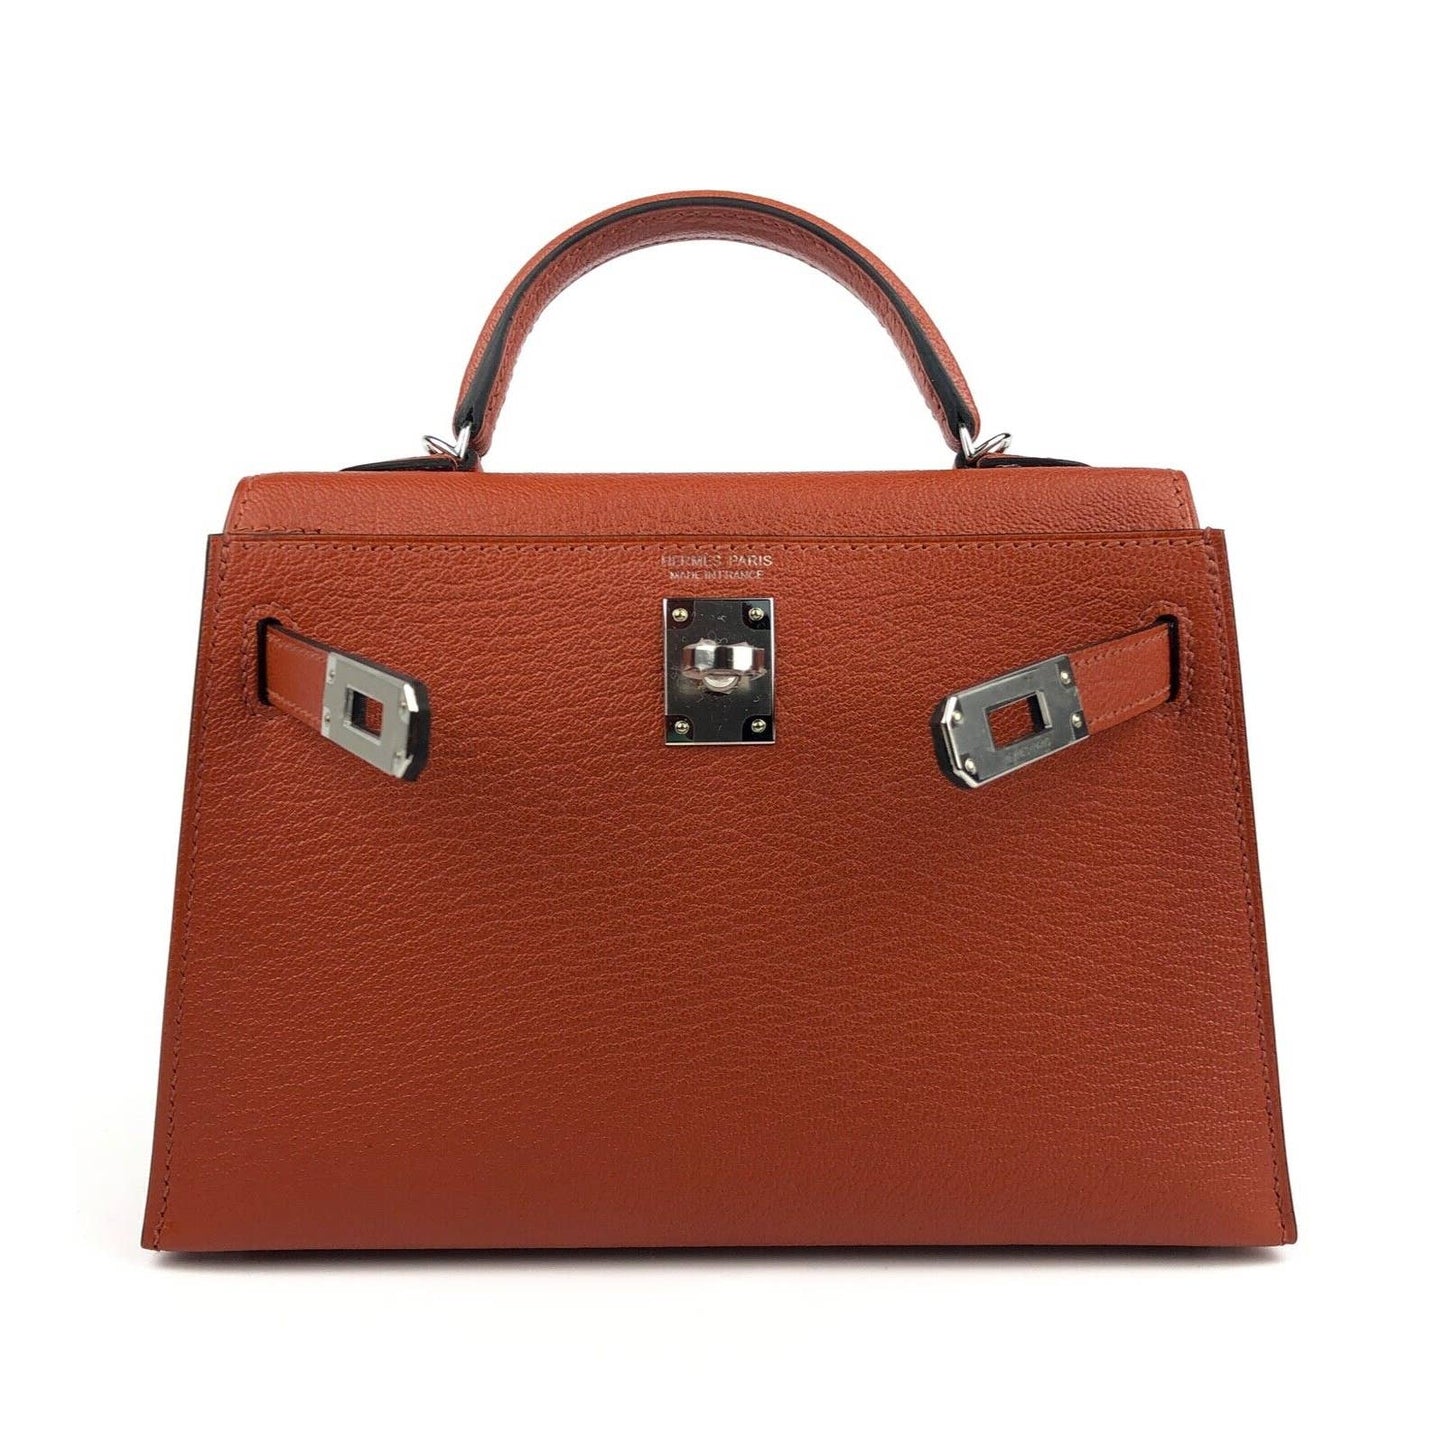 Hermes Mini Kelly 20cm Bag In Orange Clemence Leather 